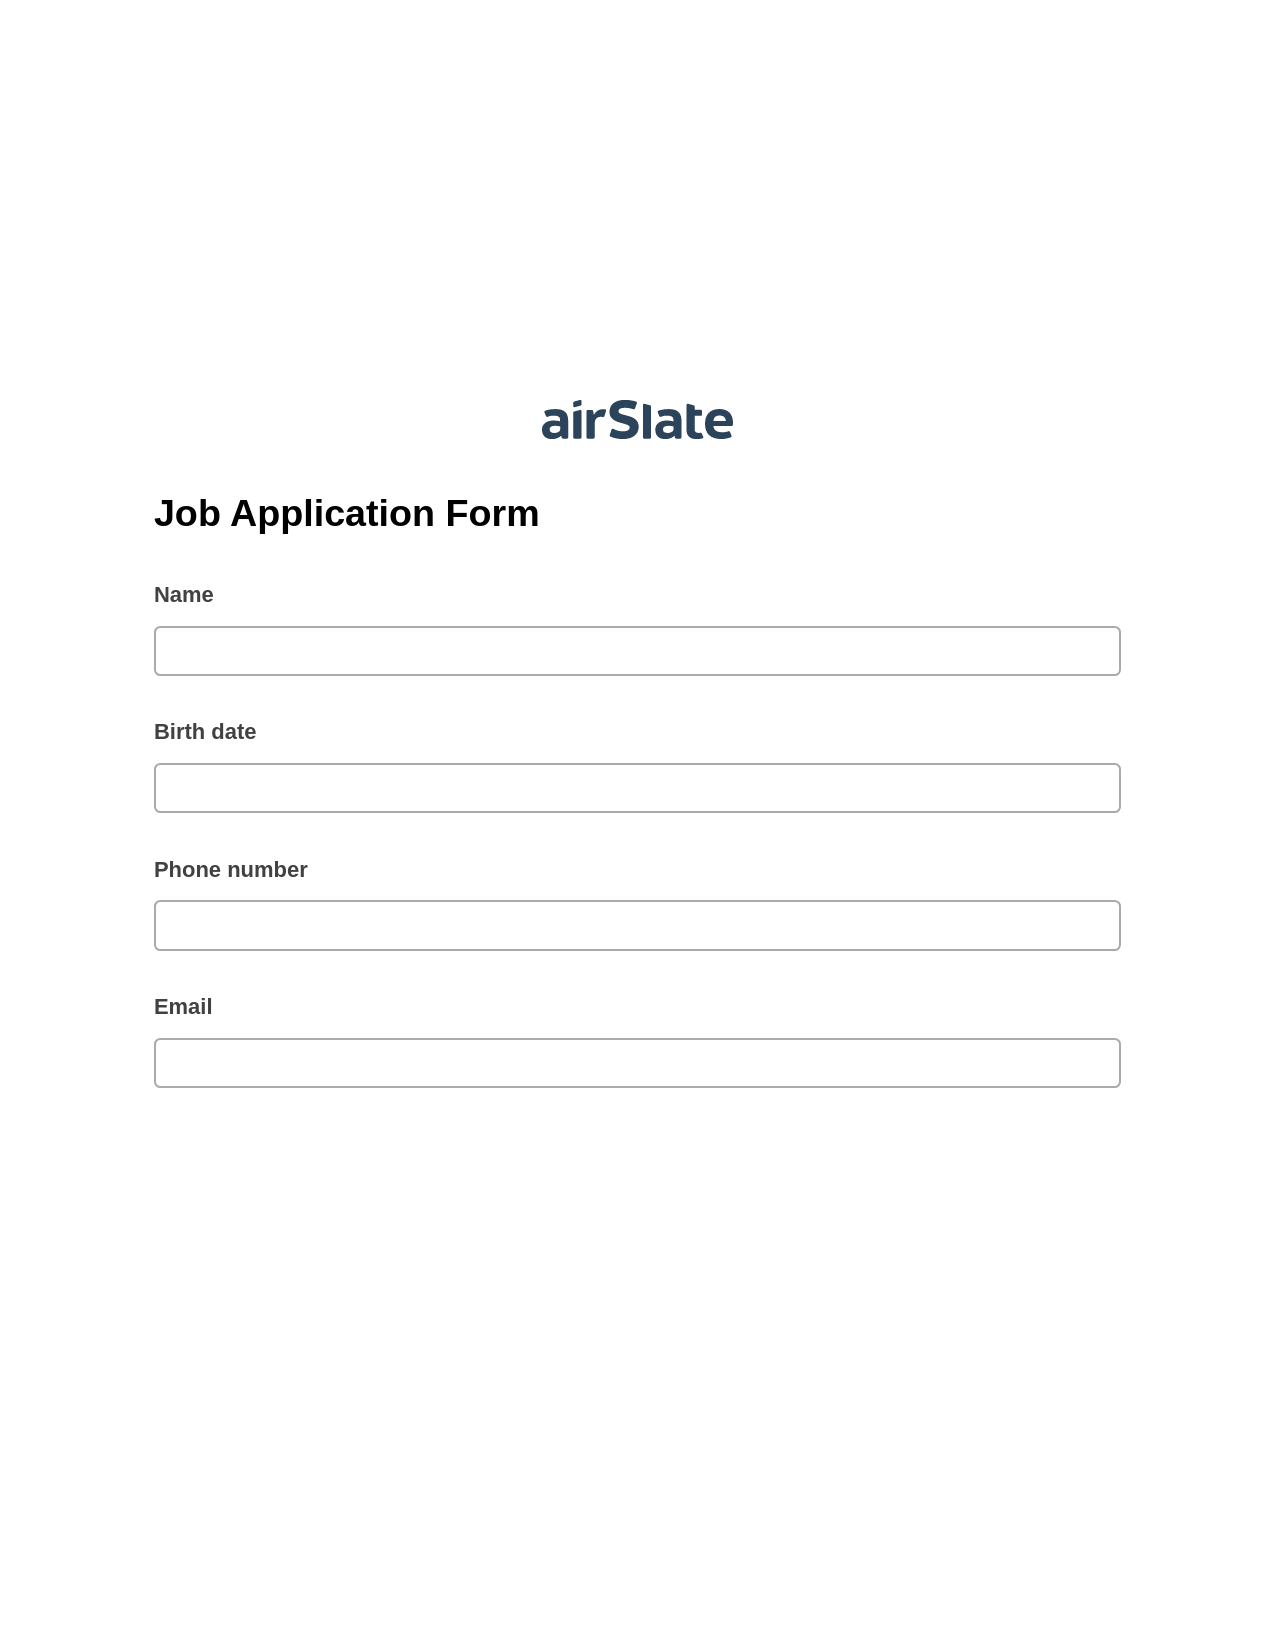 Job Application Form Pre-fill from Google Sheet Dropdown Options Bot, Send a Slate to Salesforce Contact Bot, Box Bot